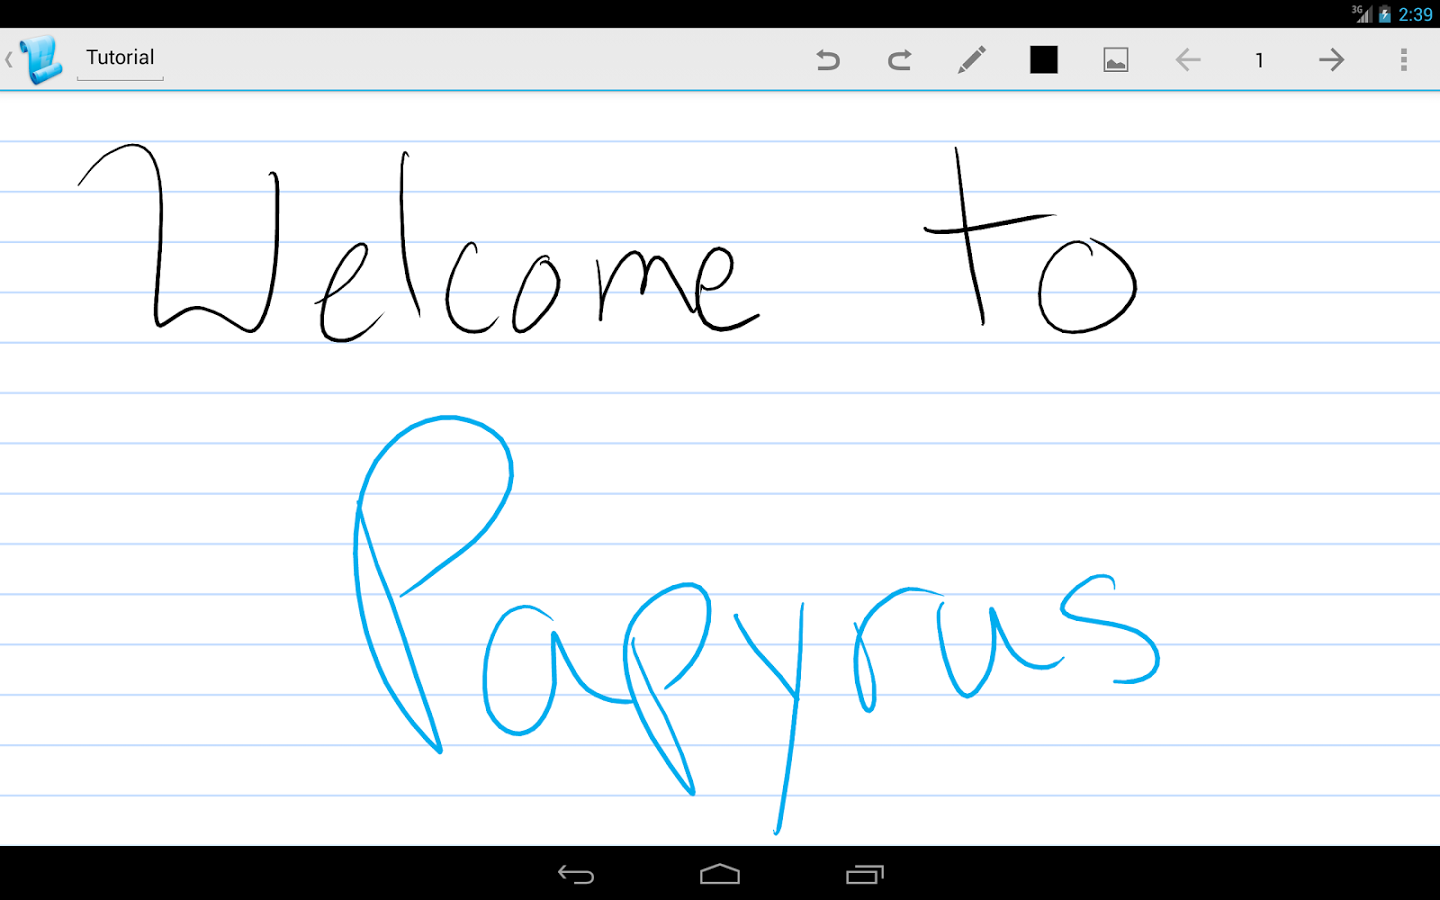 papyrus.png